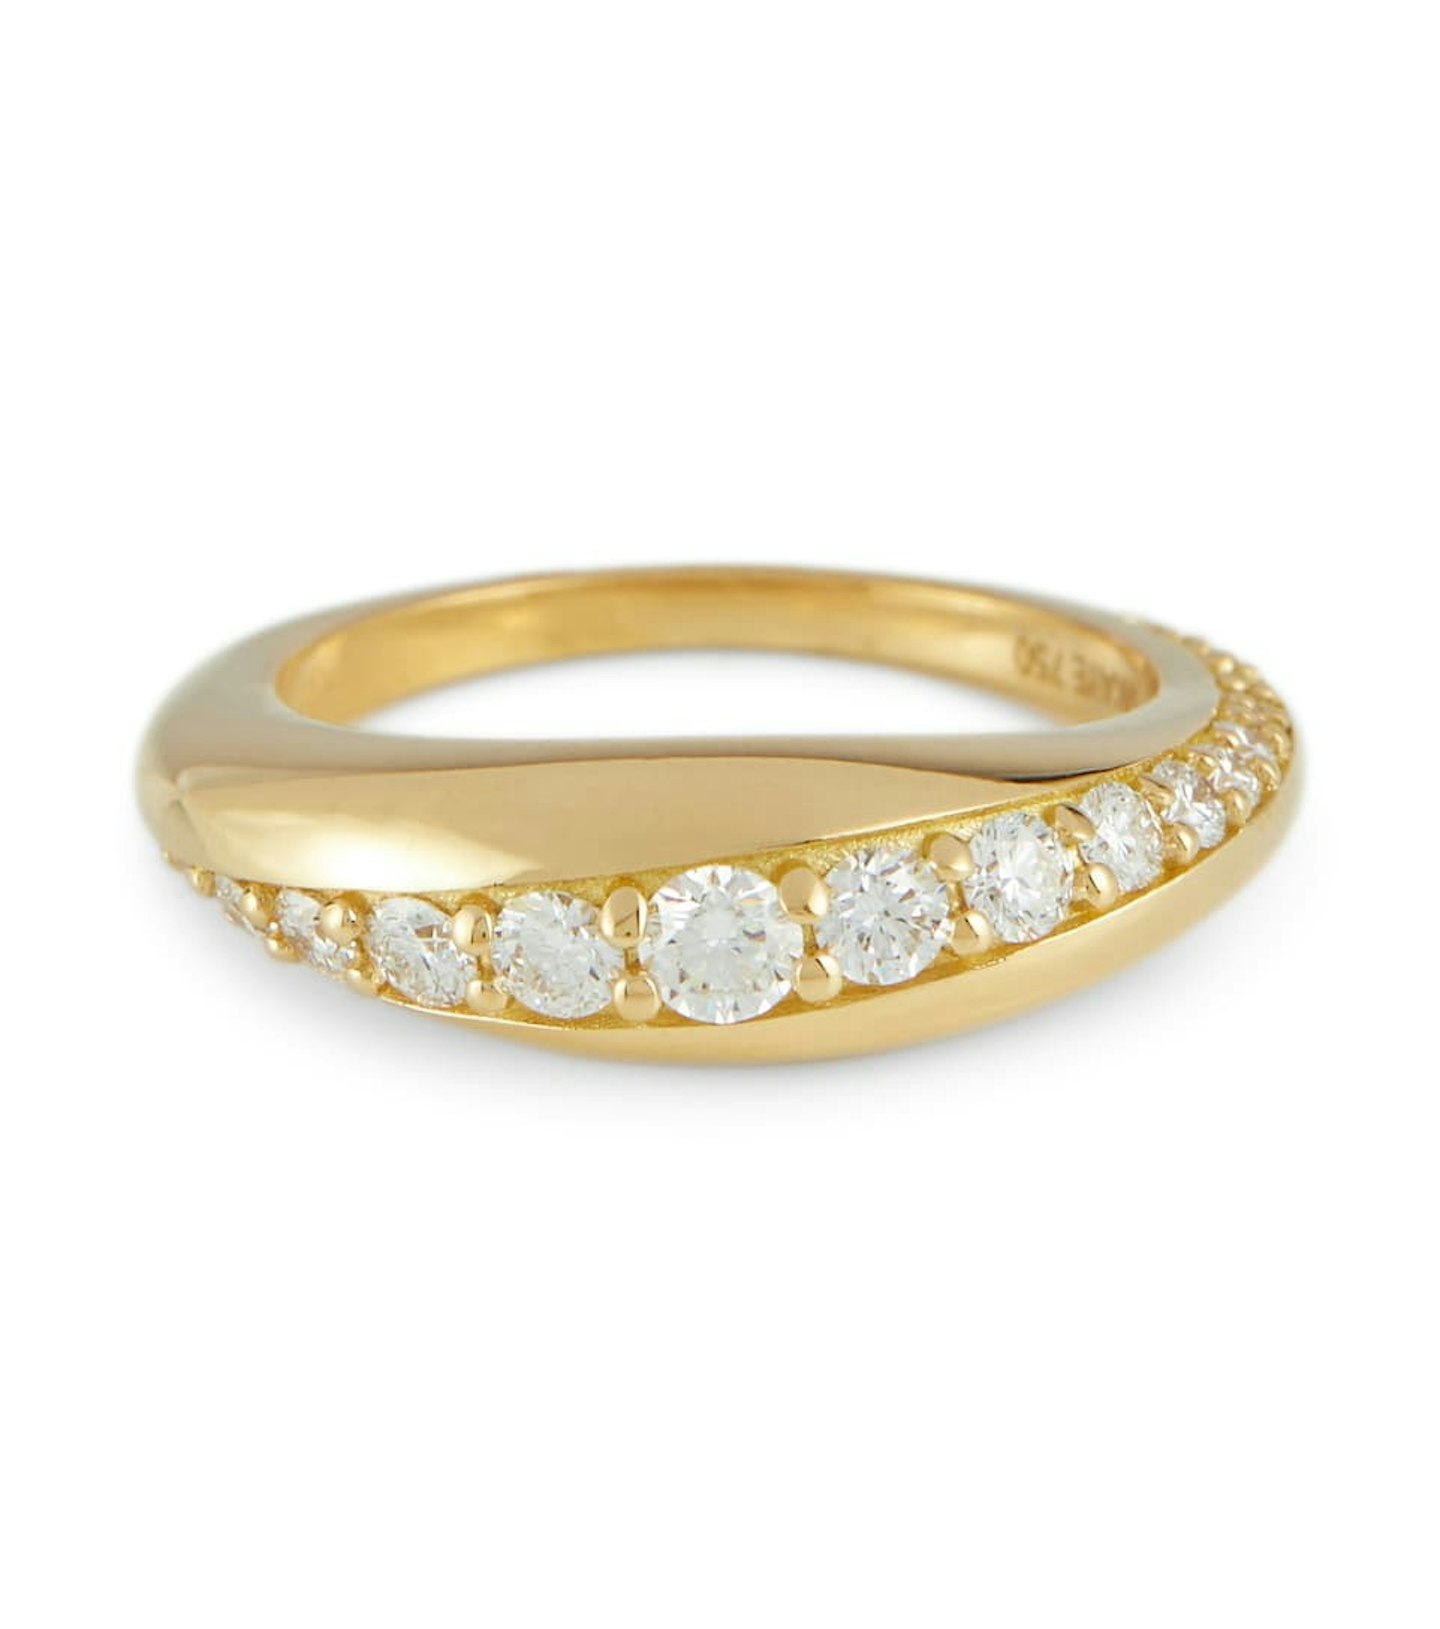 Melissa Kaye, Remi 18kt gold ring with diamonds, £3,795